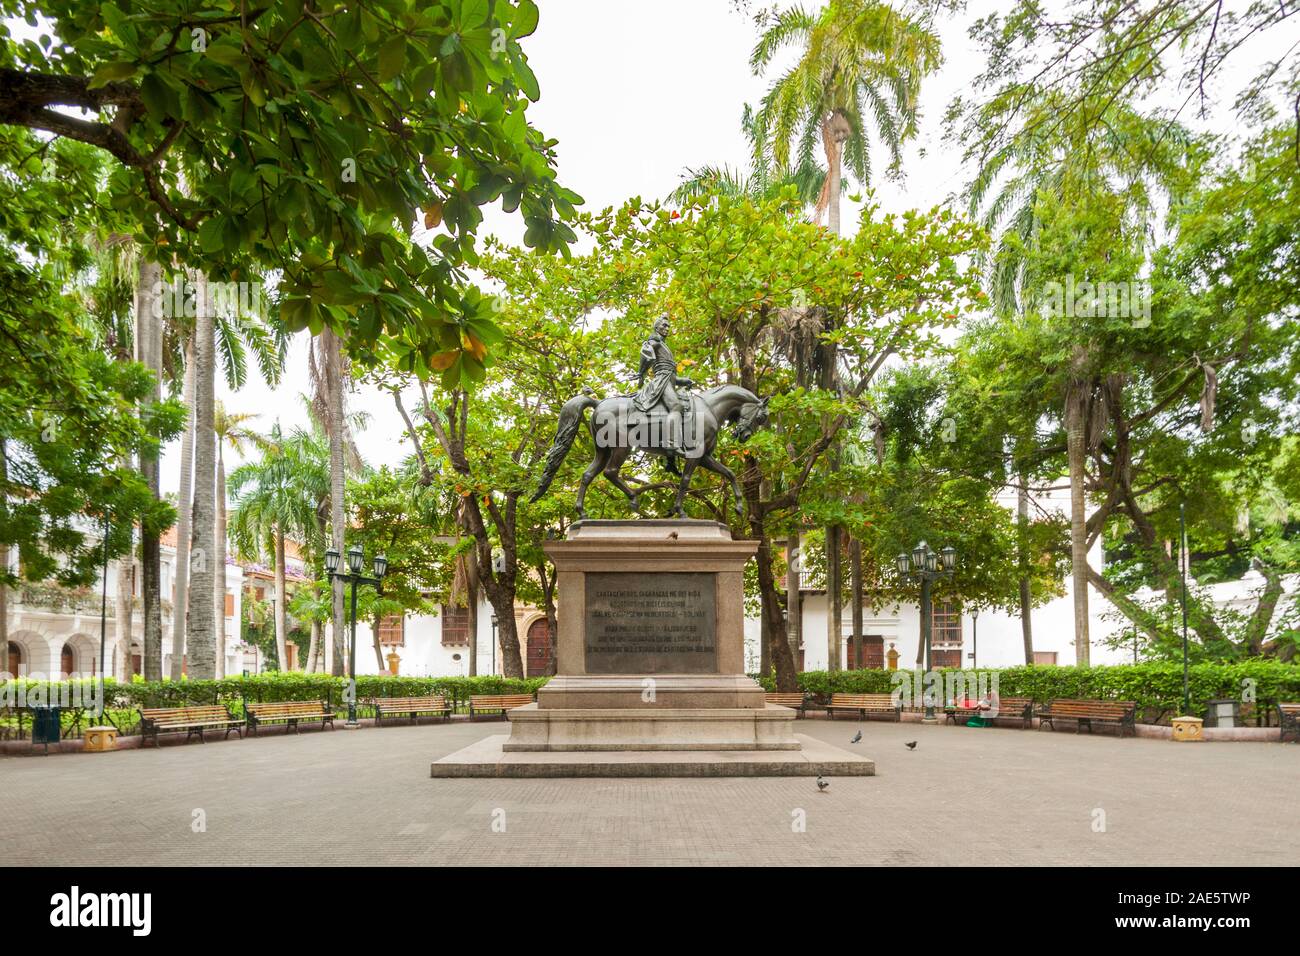 Bolivar Park (Parque de Bolivar) featuring a sculpture of Simon Bolivar on horseback in the old city in Cartagena, Colombia. Stock Photo